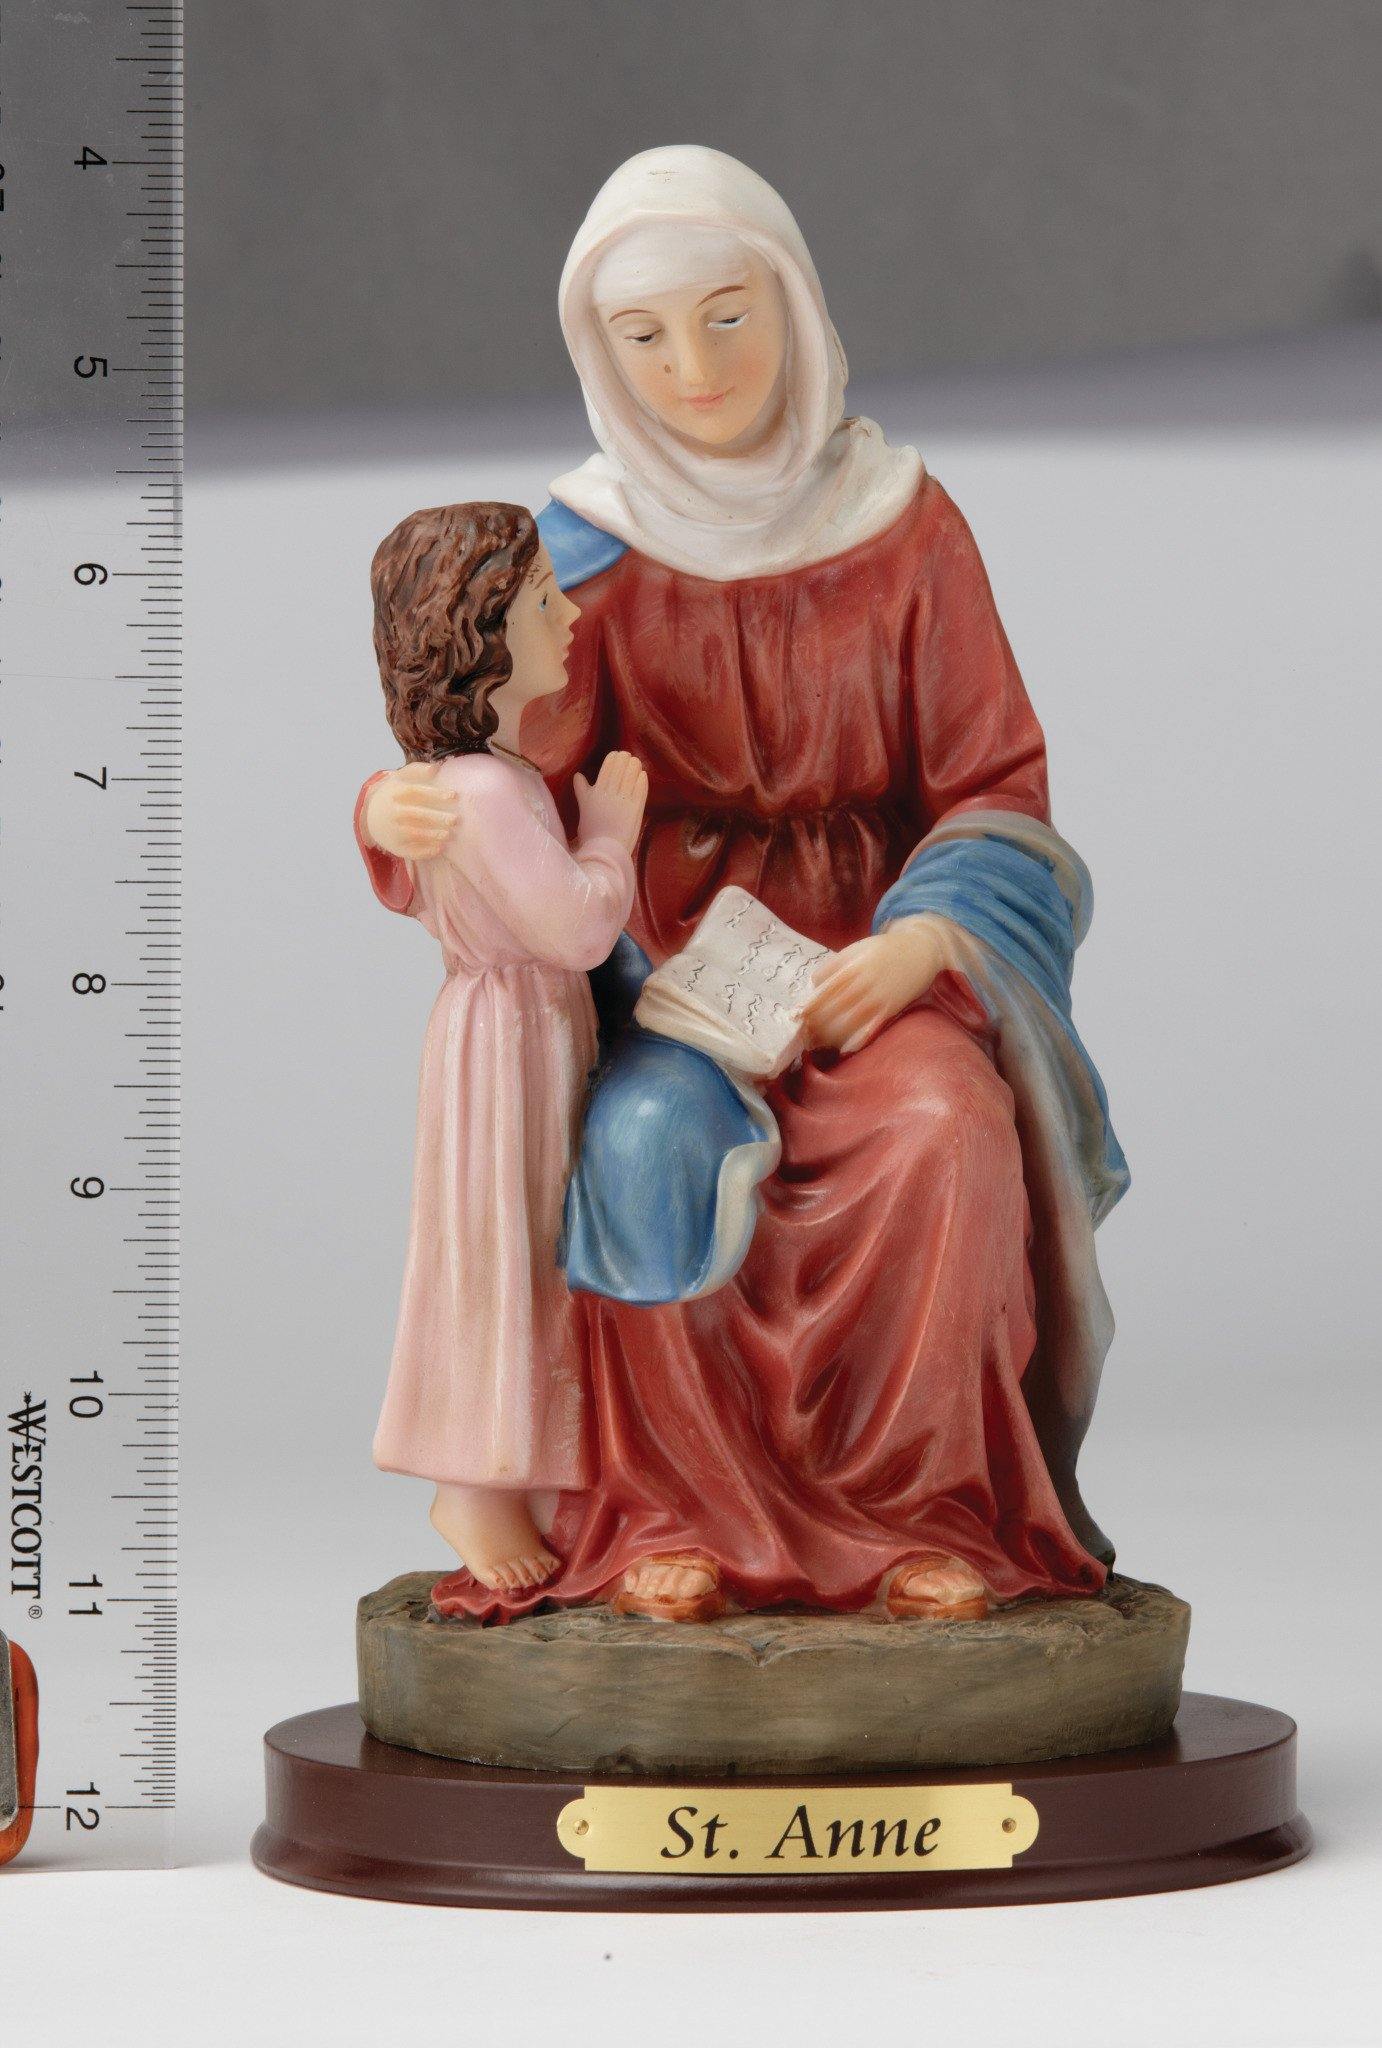 8" Saint Anne Statue - Hand Painted - Religious Art - Chiarelli's Religious Goods & Church Supply